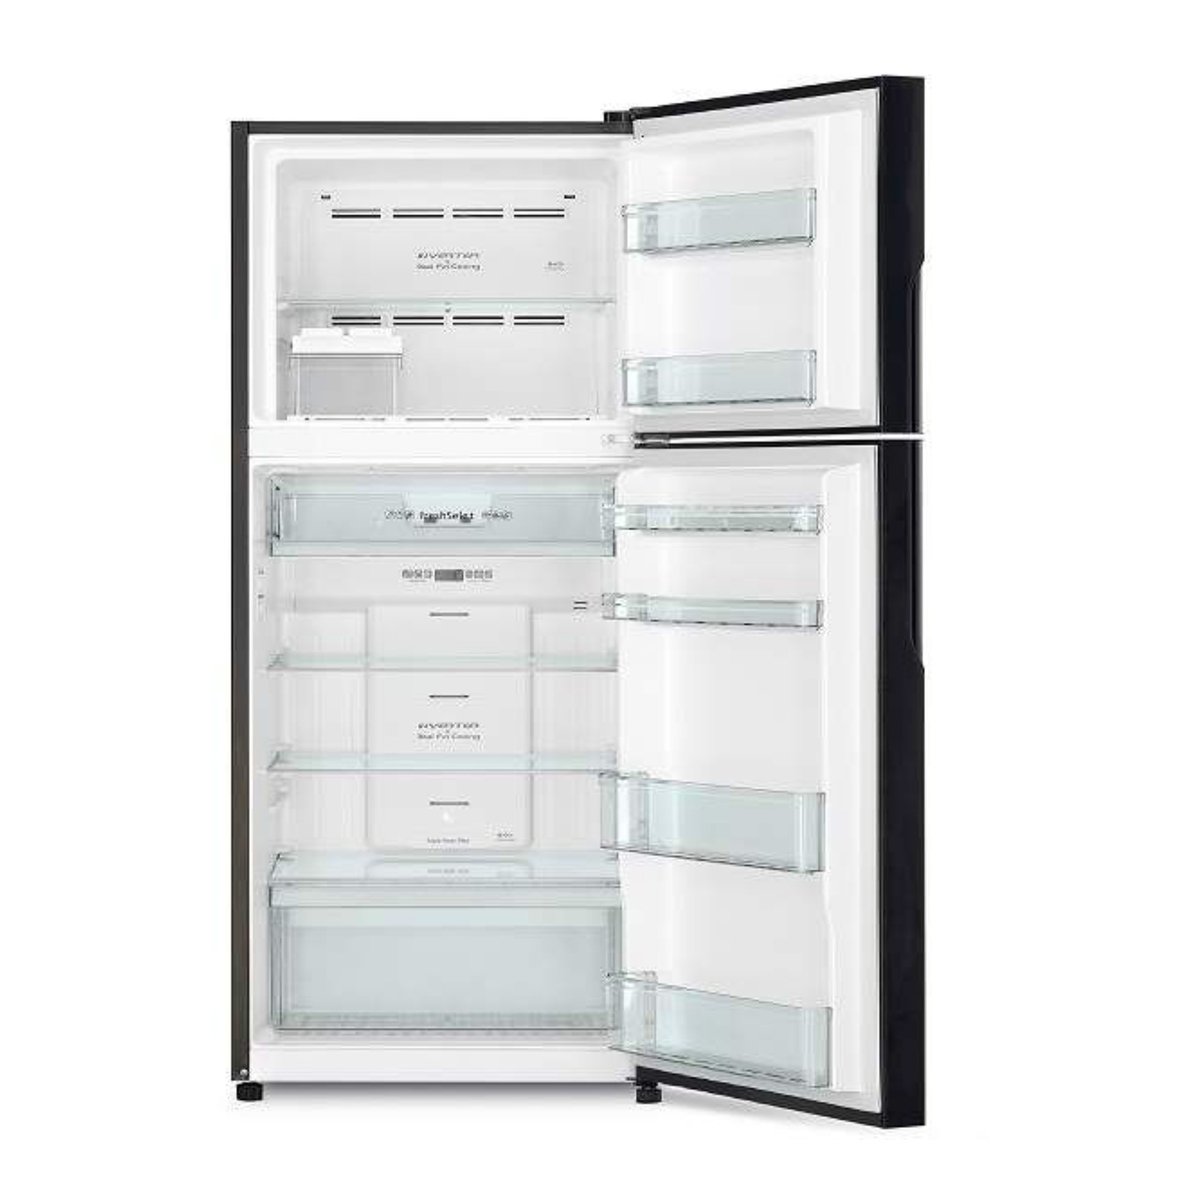 Hitachi Double Door Refrigerator RVX505PUK9KPSV 366LTR